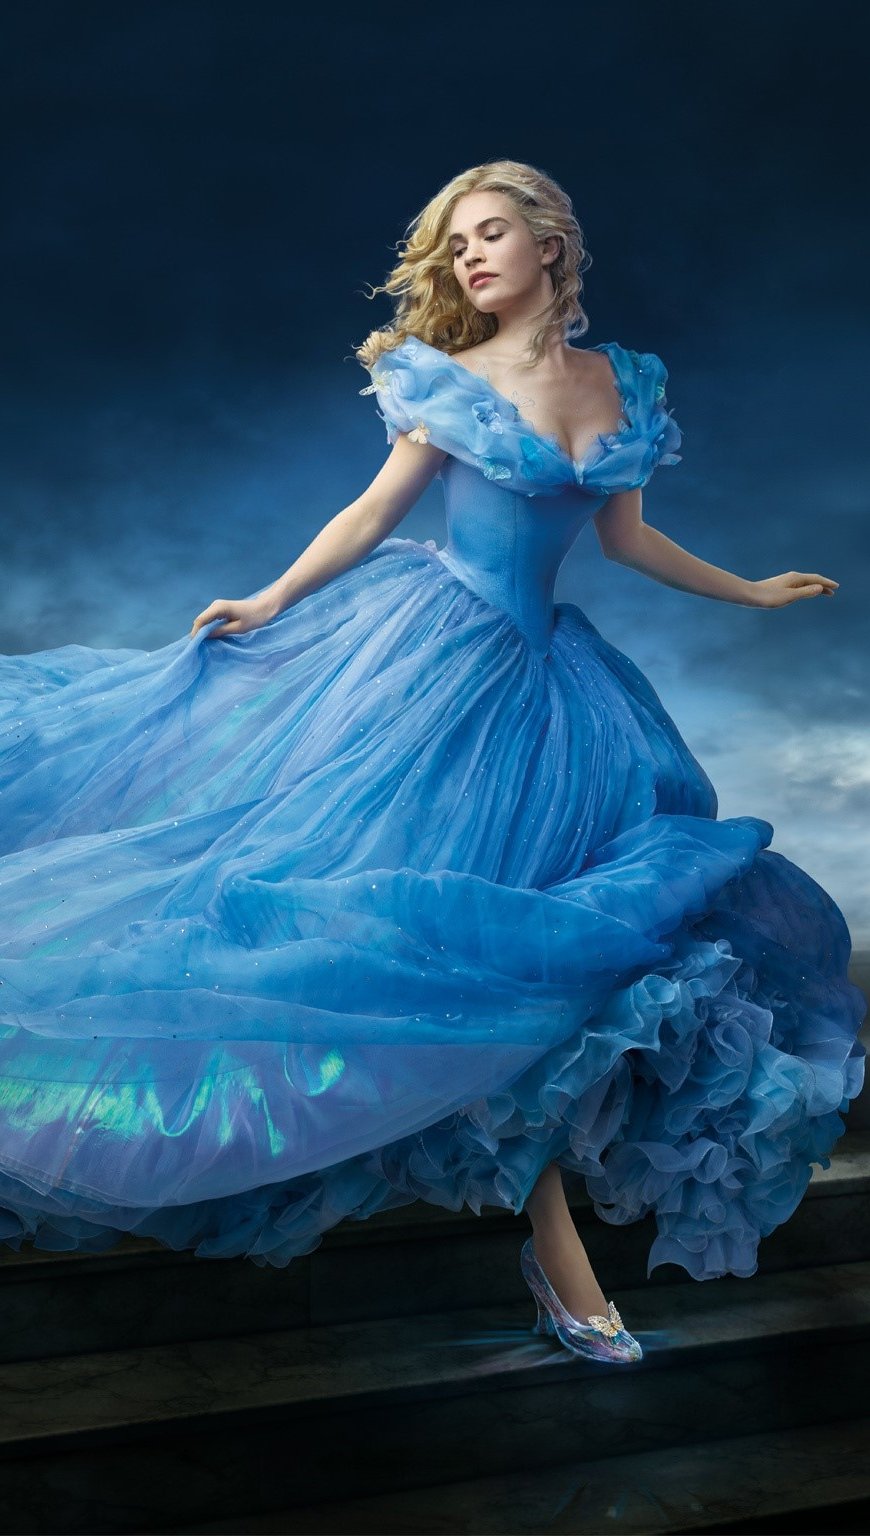 Cinderella 2015 Wallpapers